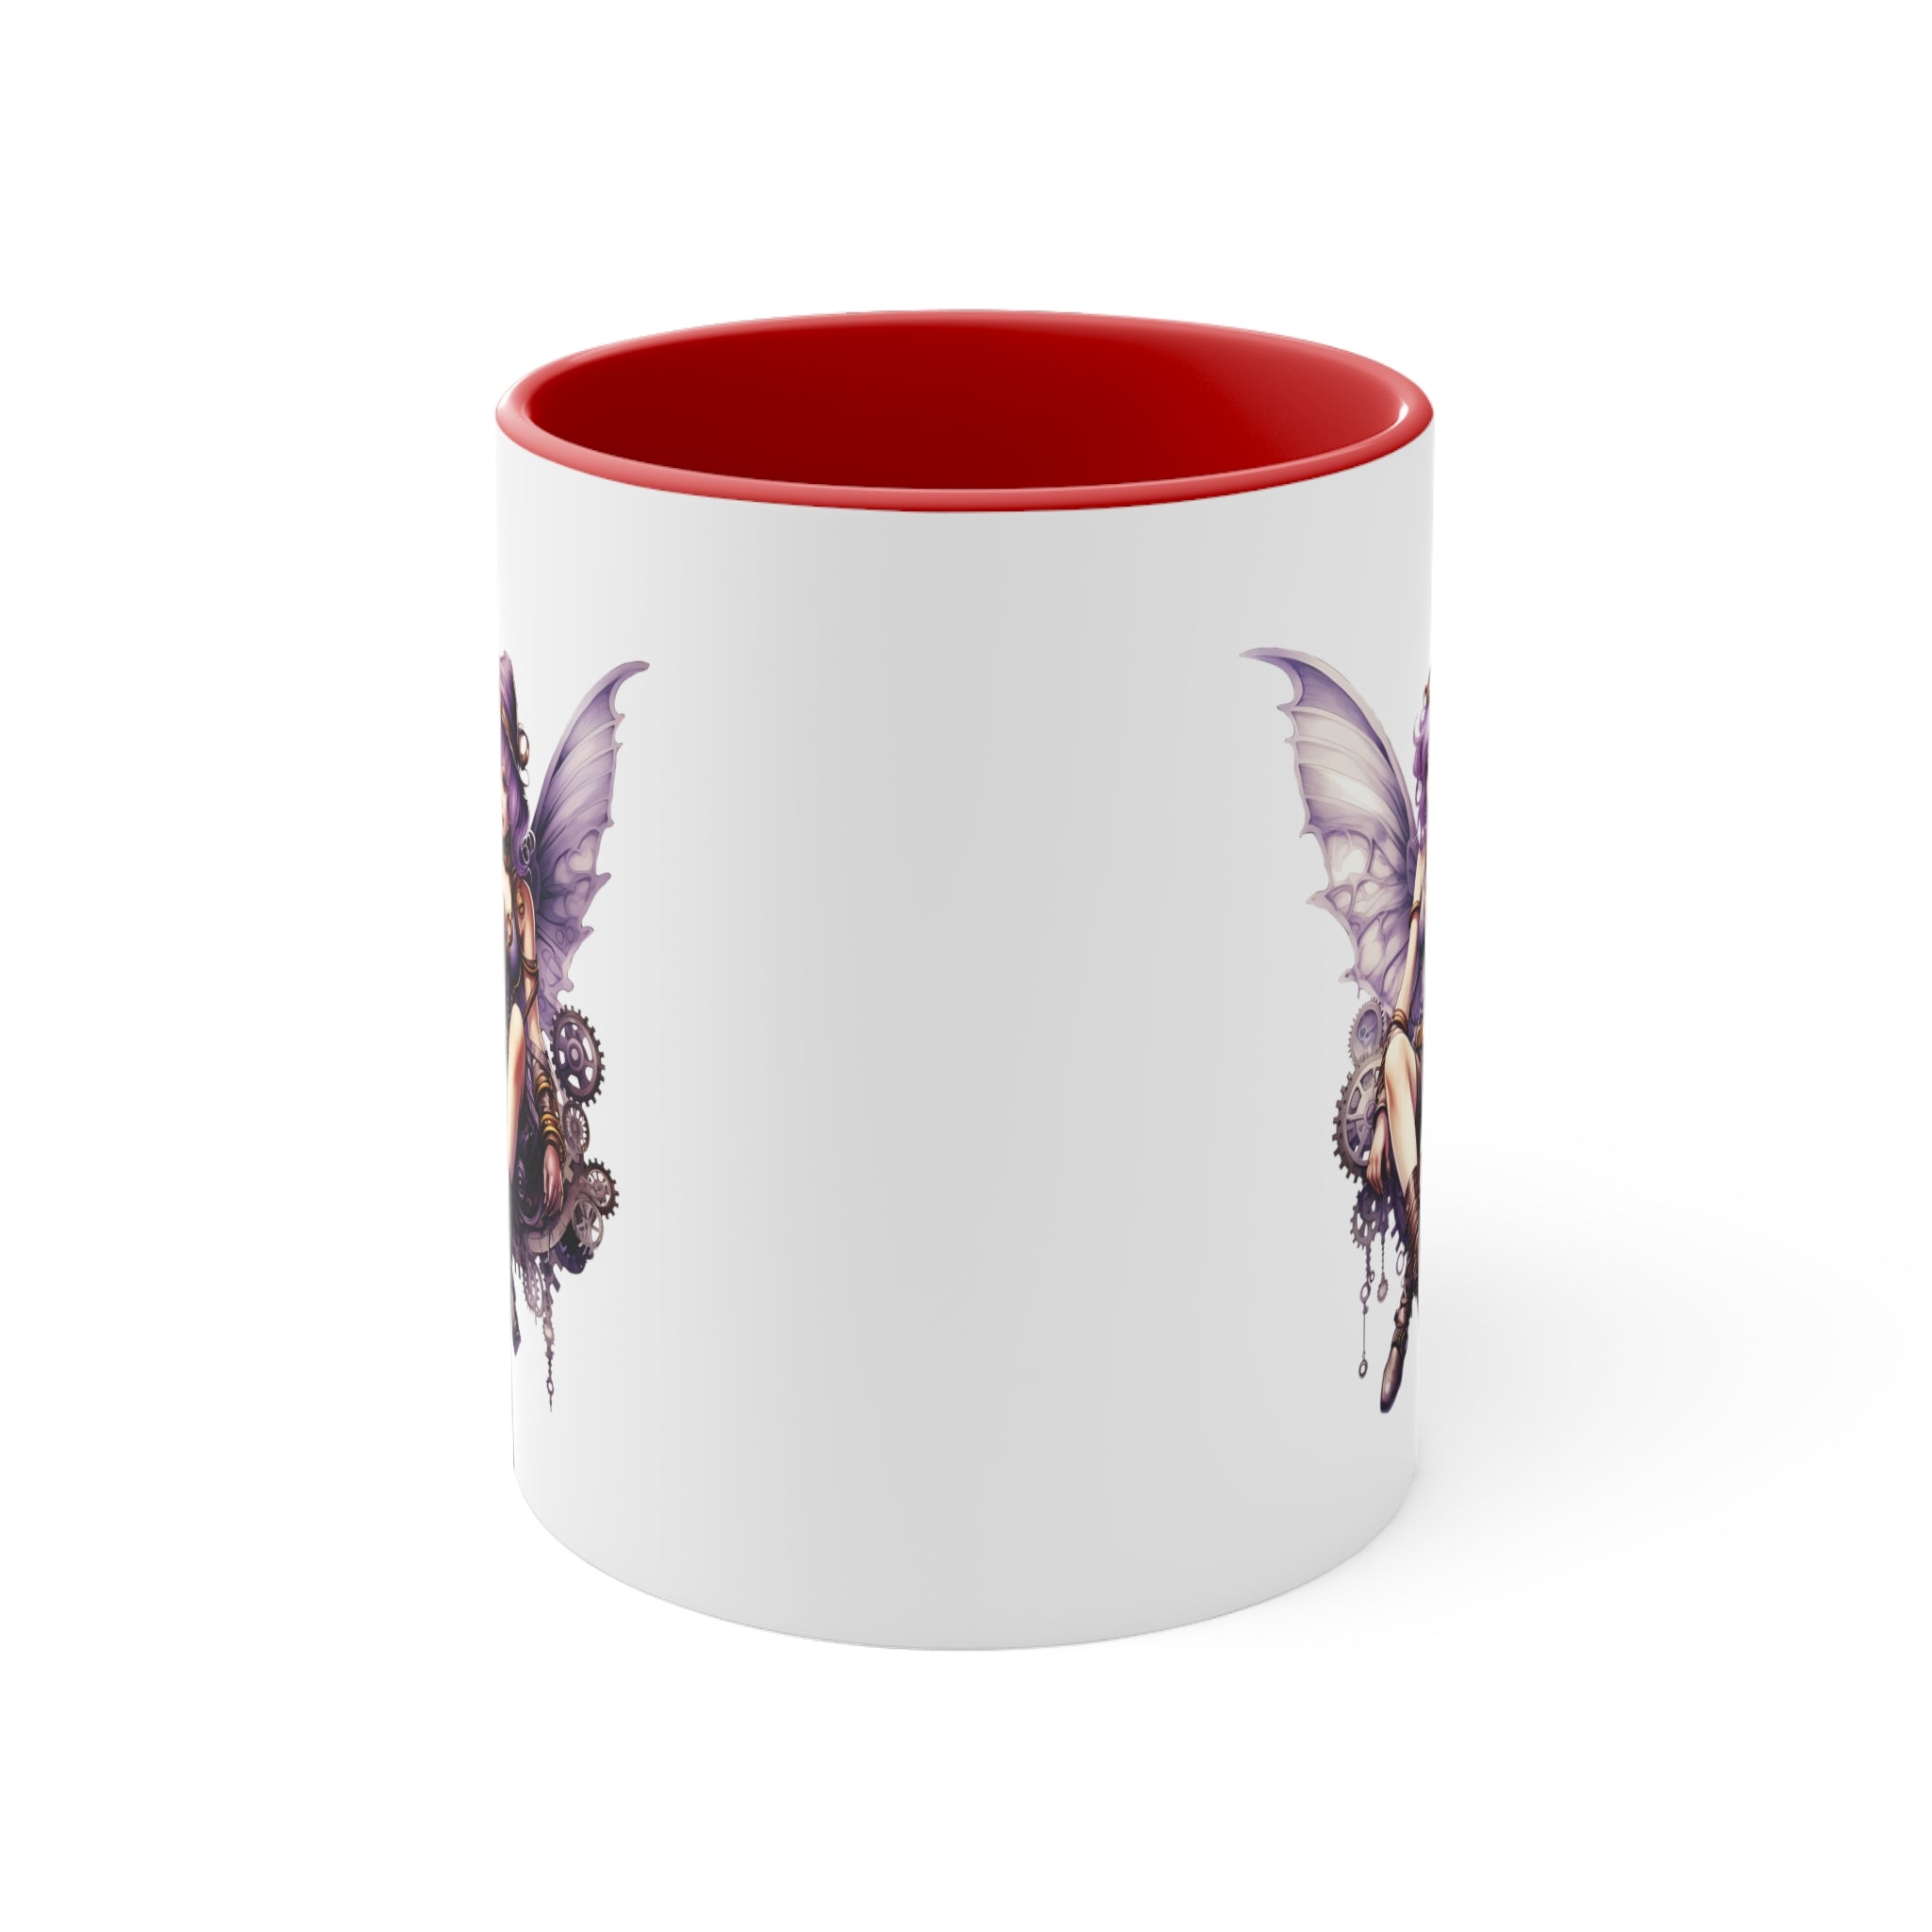 steampunk pixie Accent Coffee Mug, 11oz gift D7